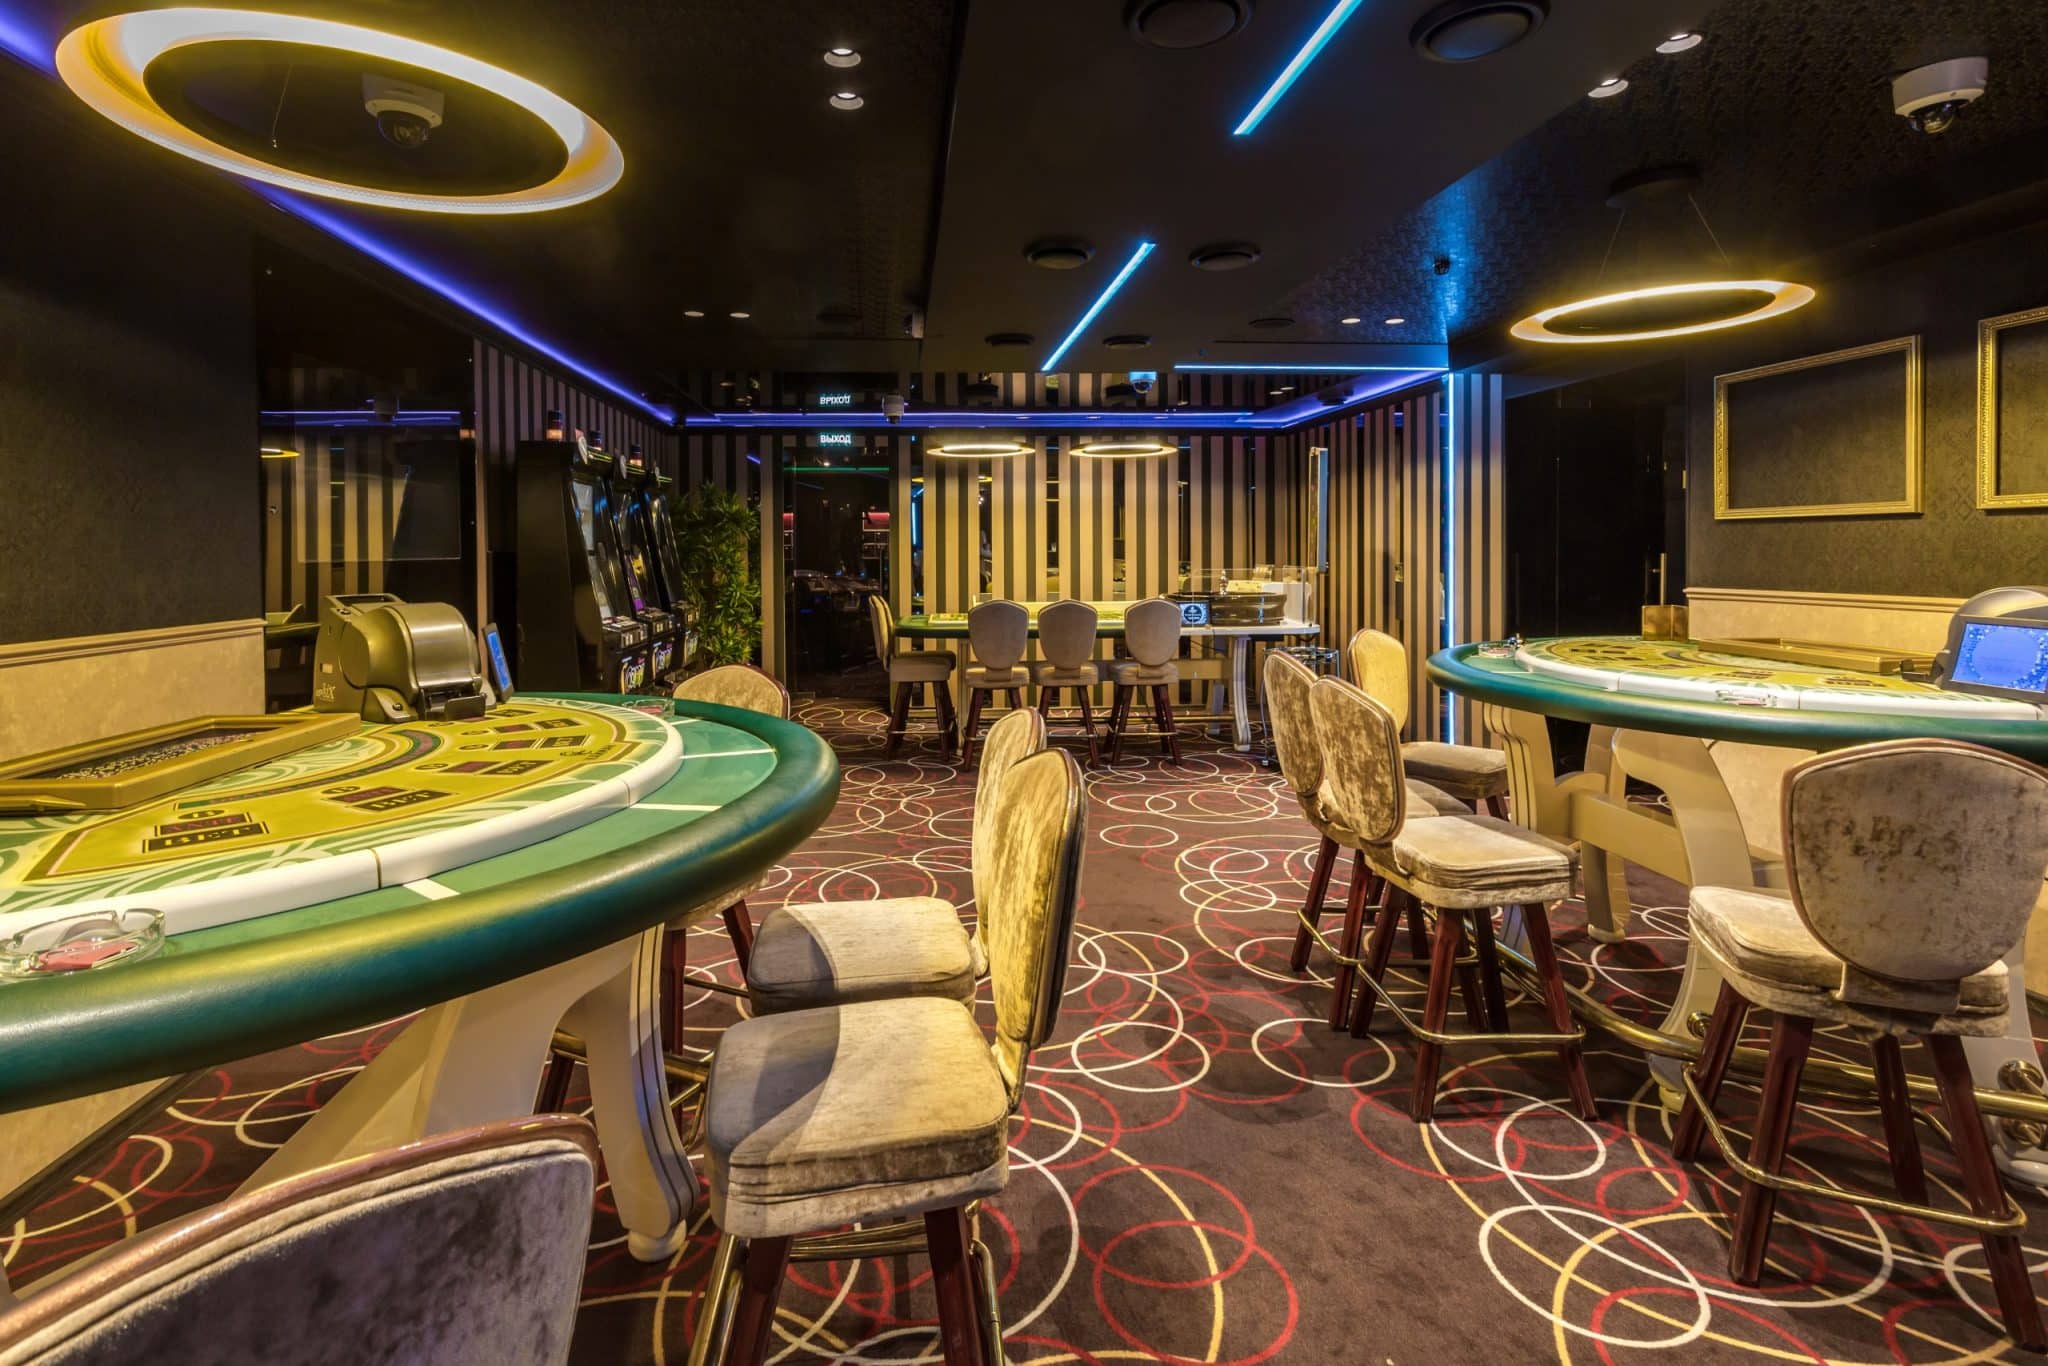 LAS VEGAS, USA - MAY, 2017: interior of elite luxury vip casino with poker tables